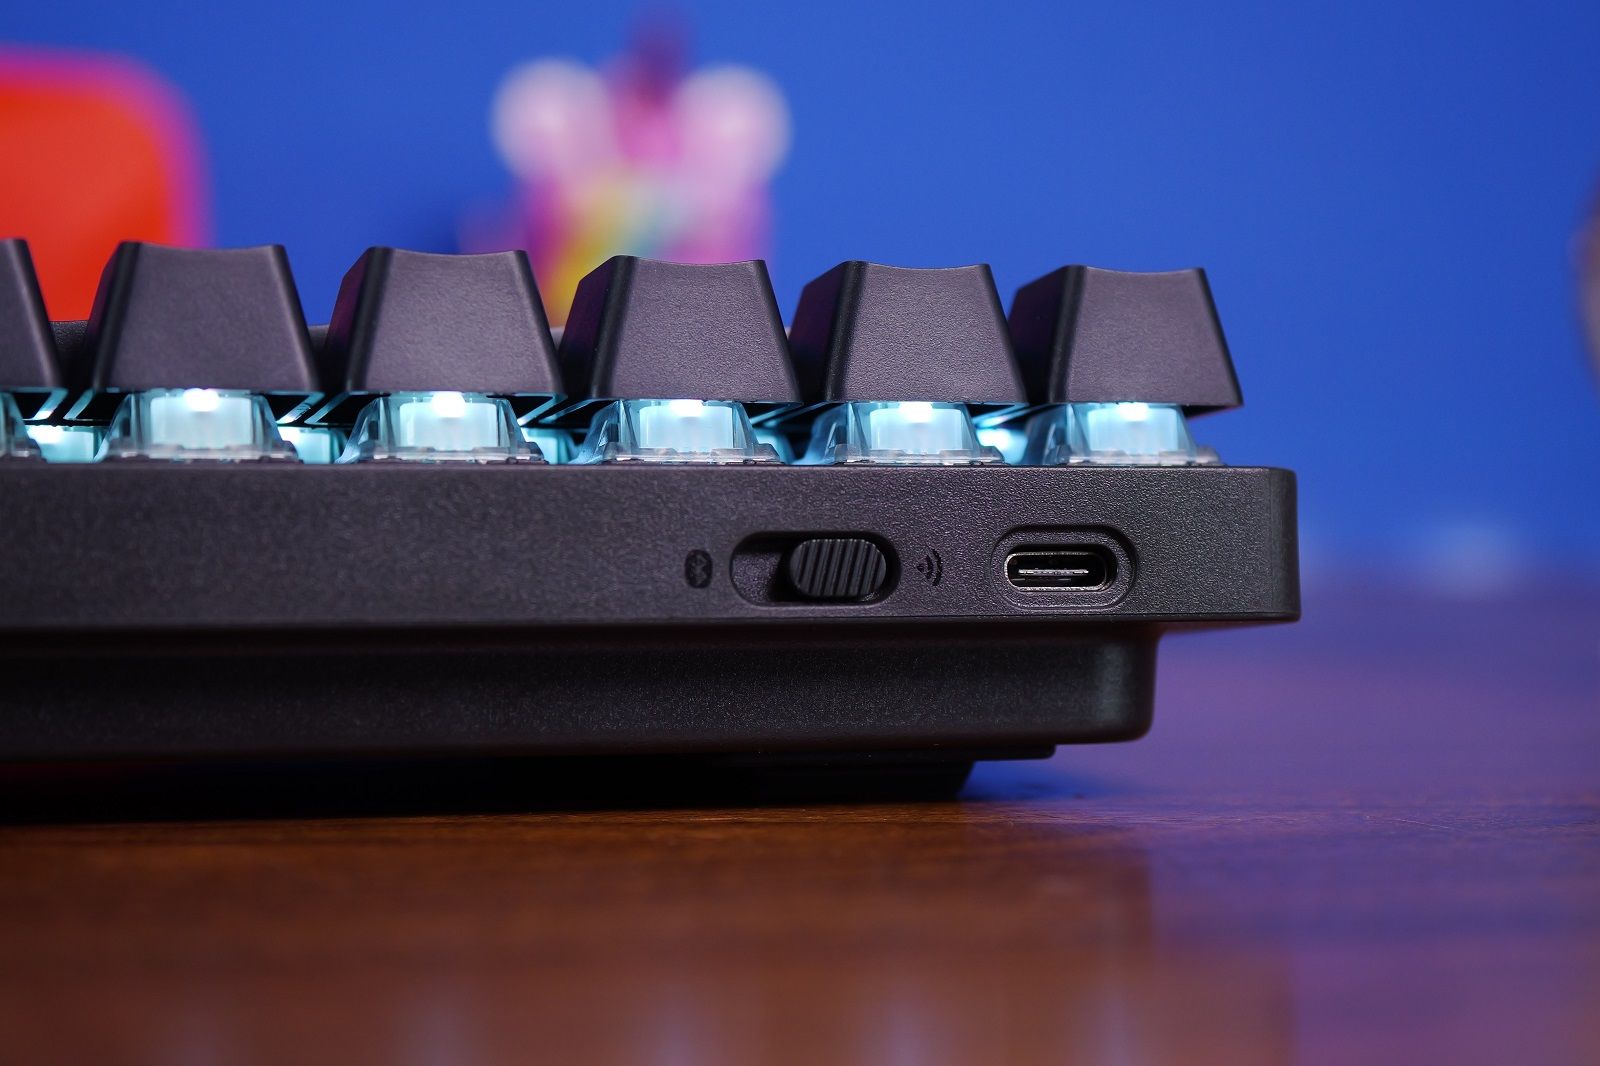 Apex Pro Mini Wireless compact gaming keyboard